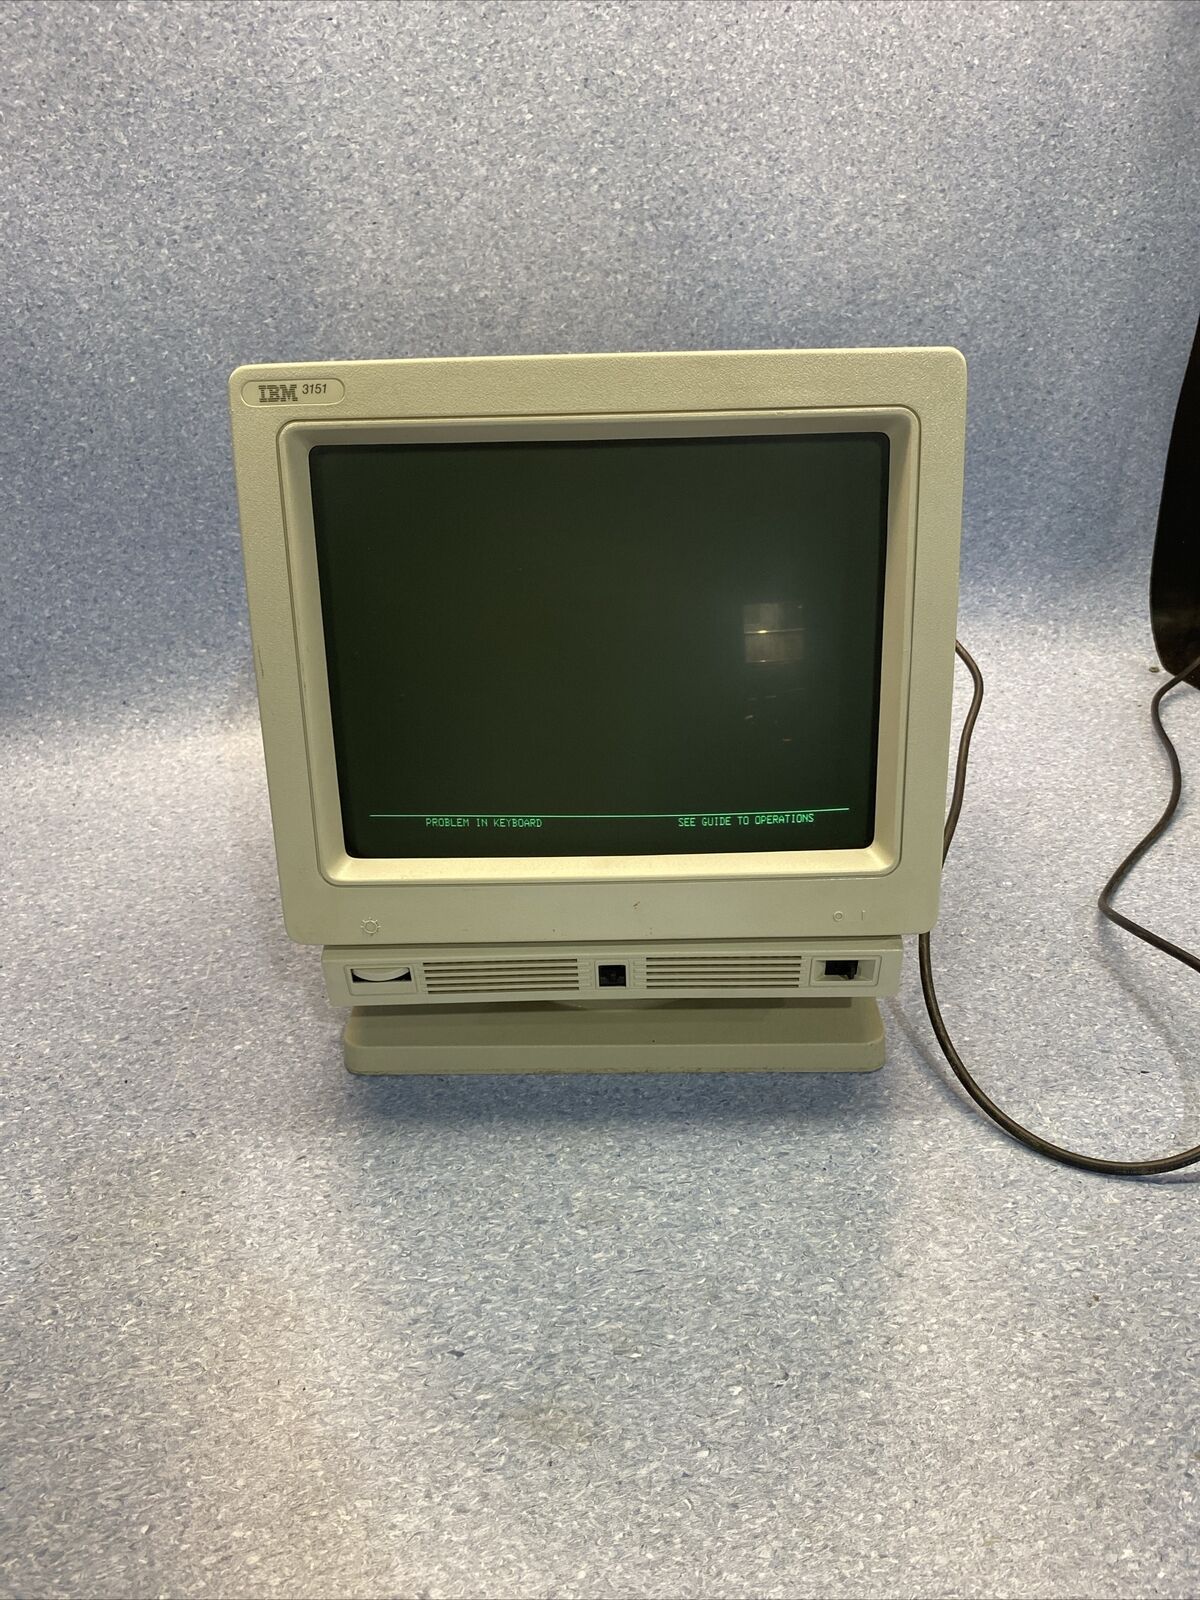 Vintage IBM 3151 TESTED POWERS ON Green Display Terminal CRT Monitor